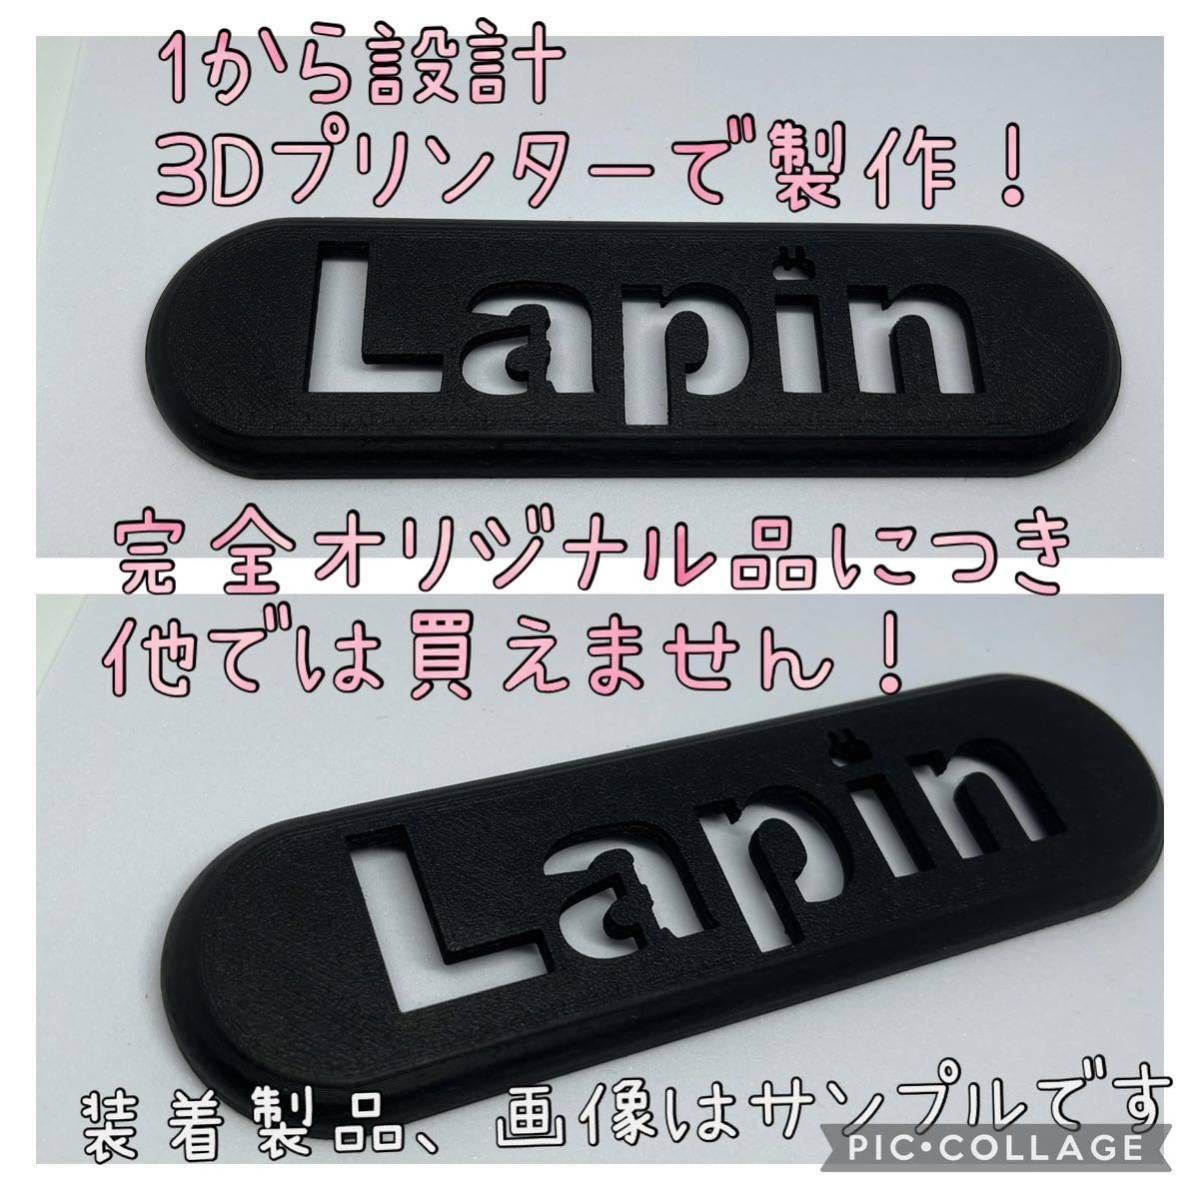 HE33Sラパン/ラパンLC専用lapinハイマウントストップランプカバー文字ver.2 lapin hidden rabbit d